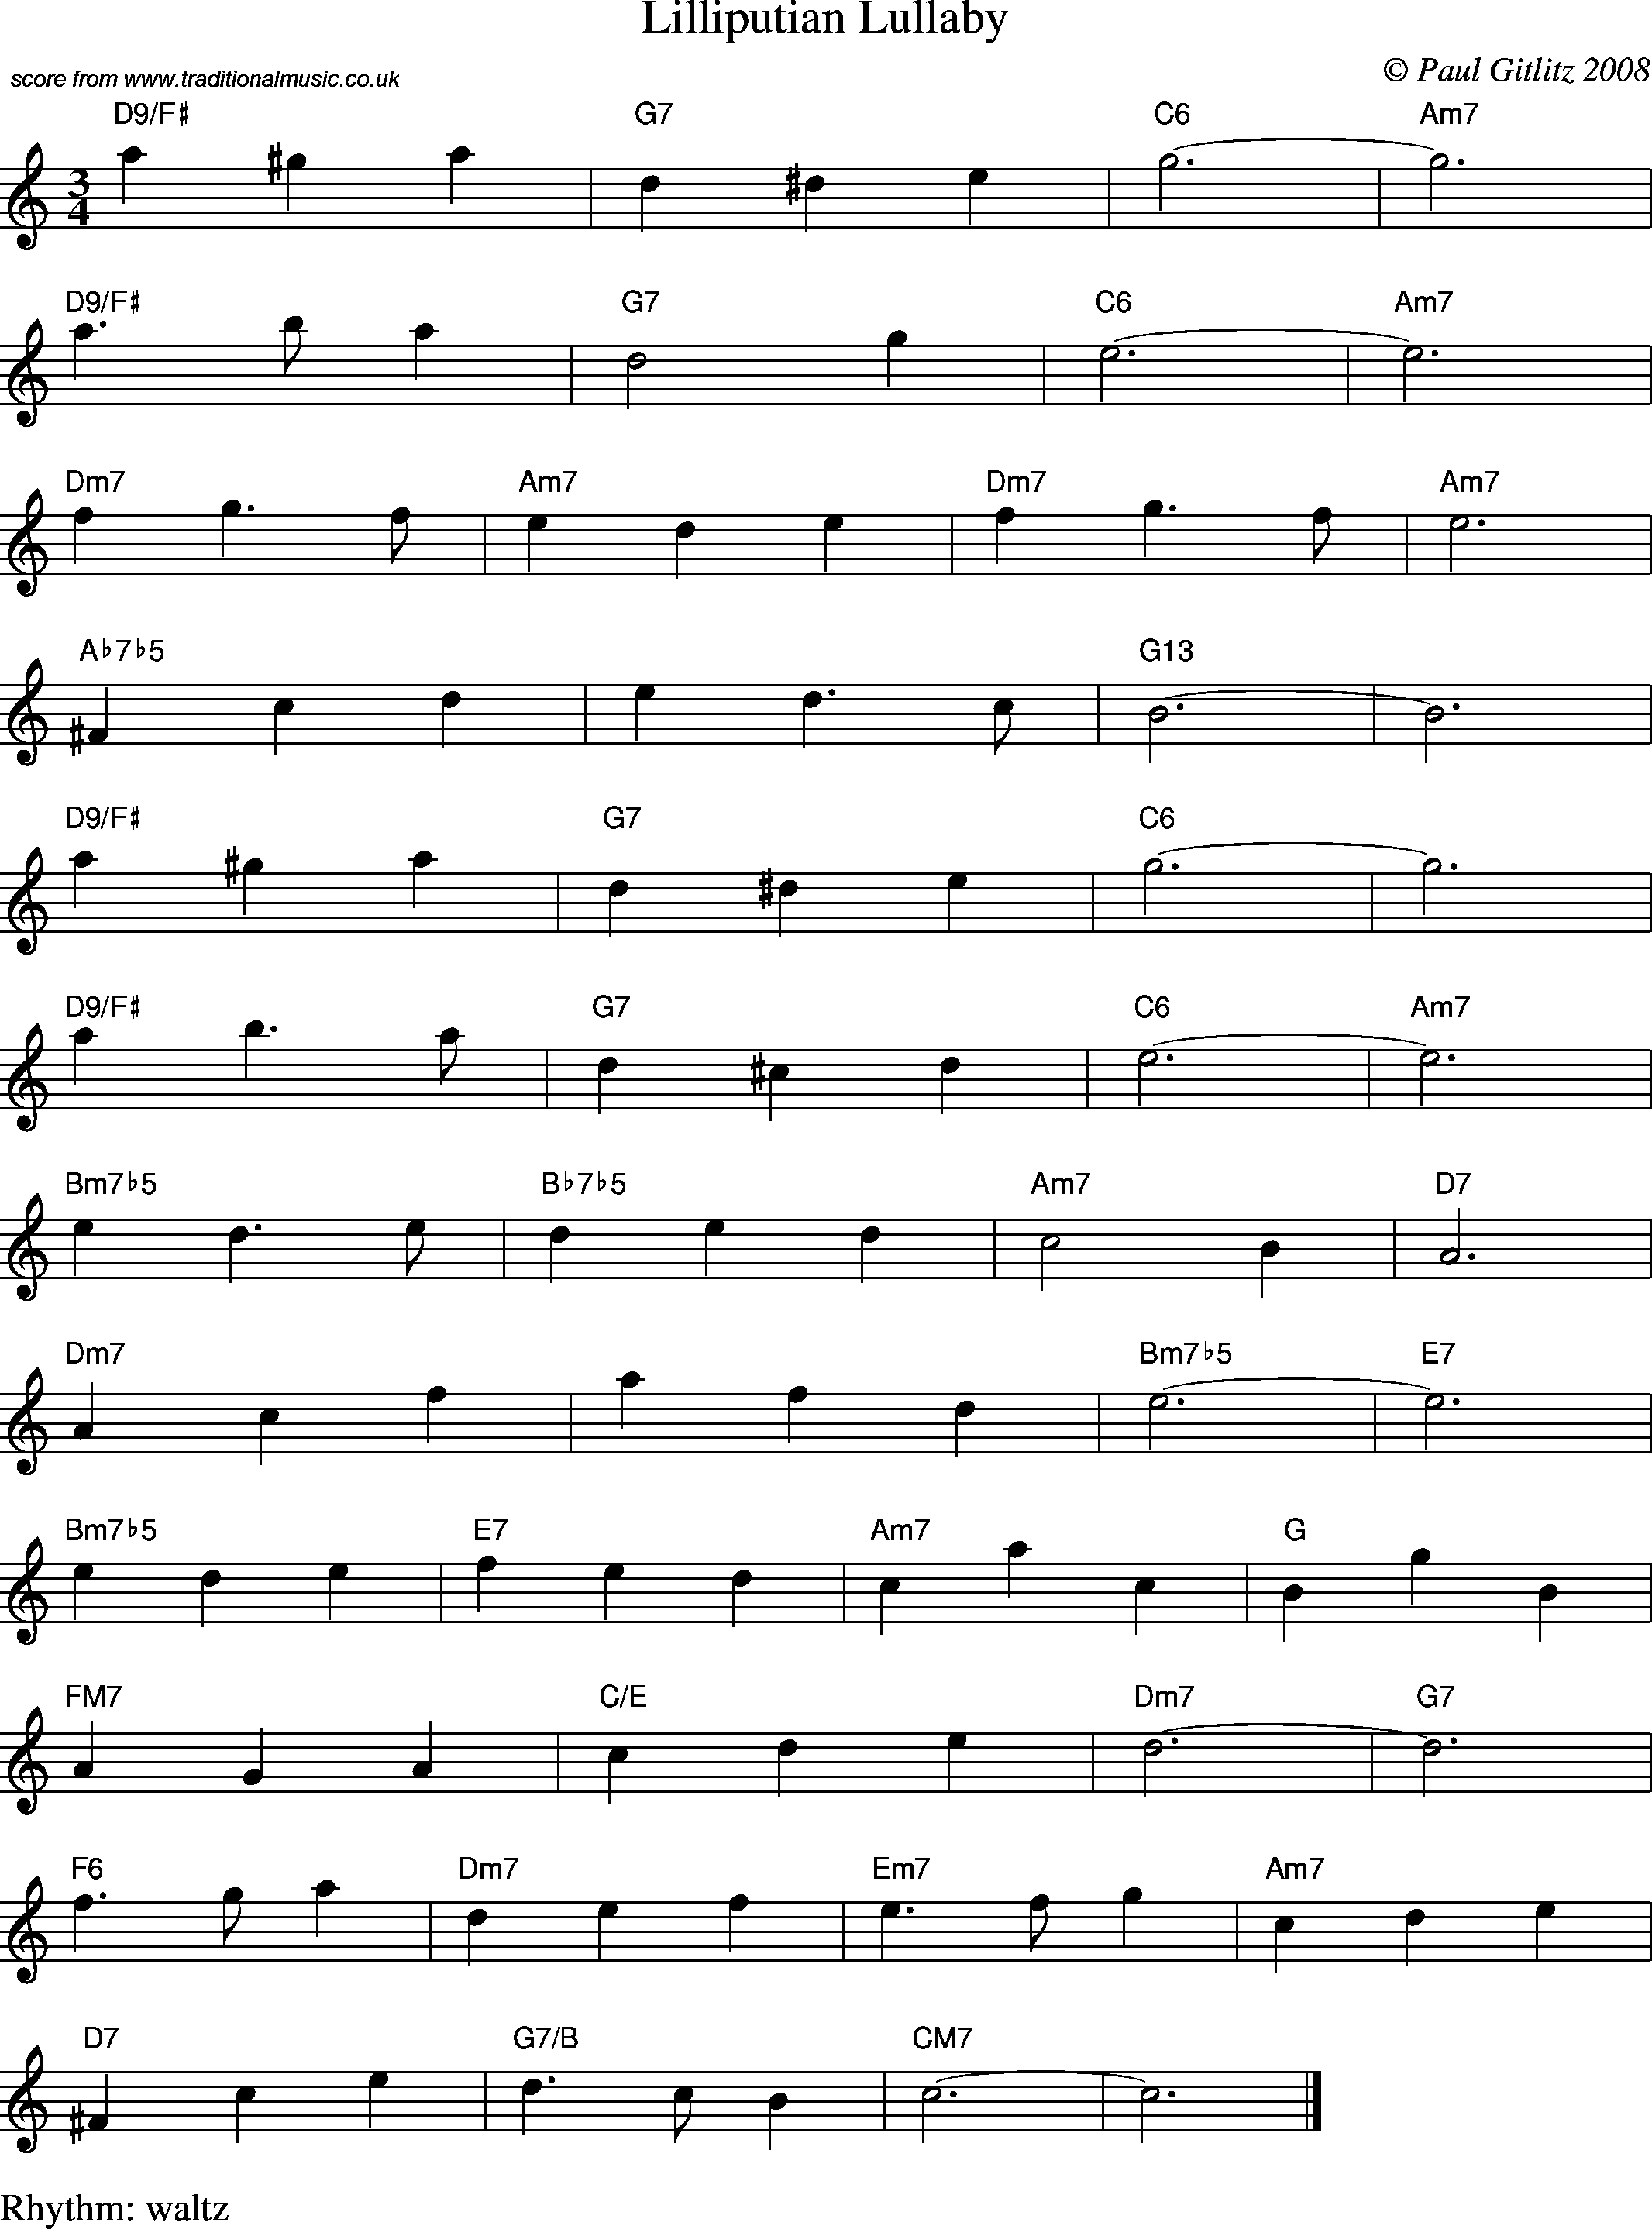 Sheet Music Score for Waltz - Lilliputian Lullaby